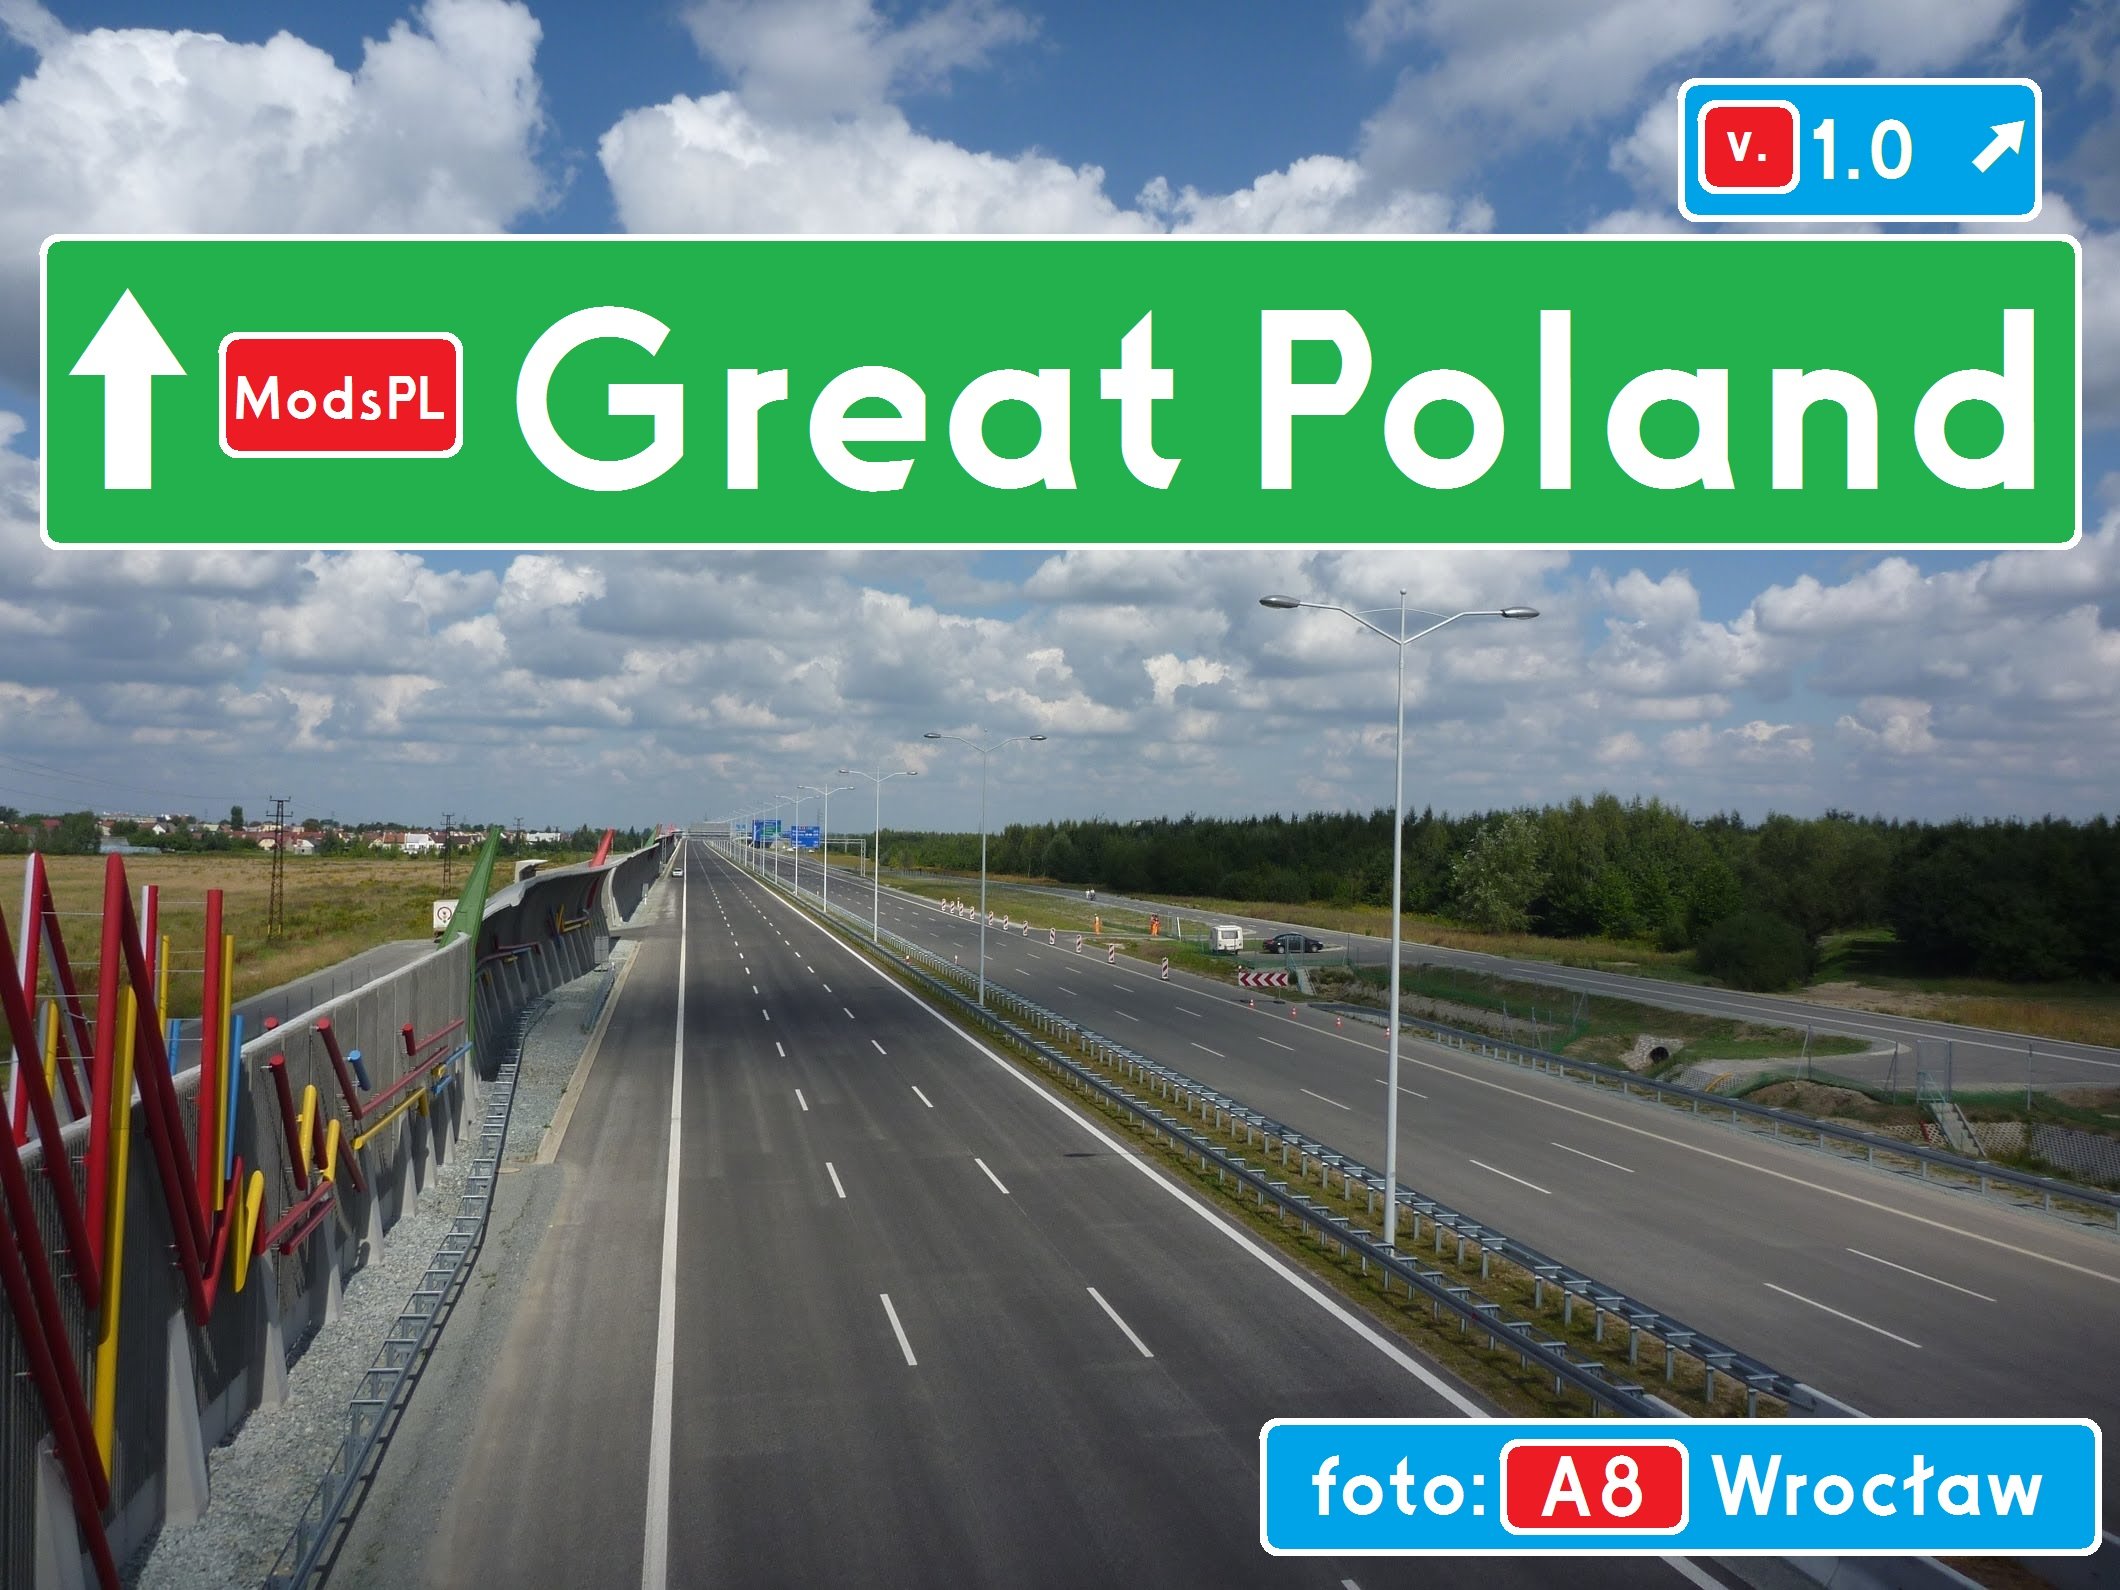 Great Poland v.1.0 by ModsPL